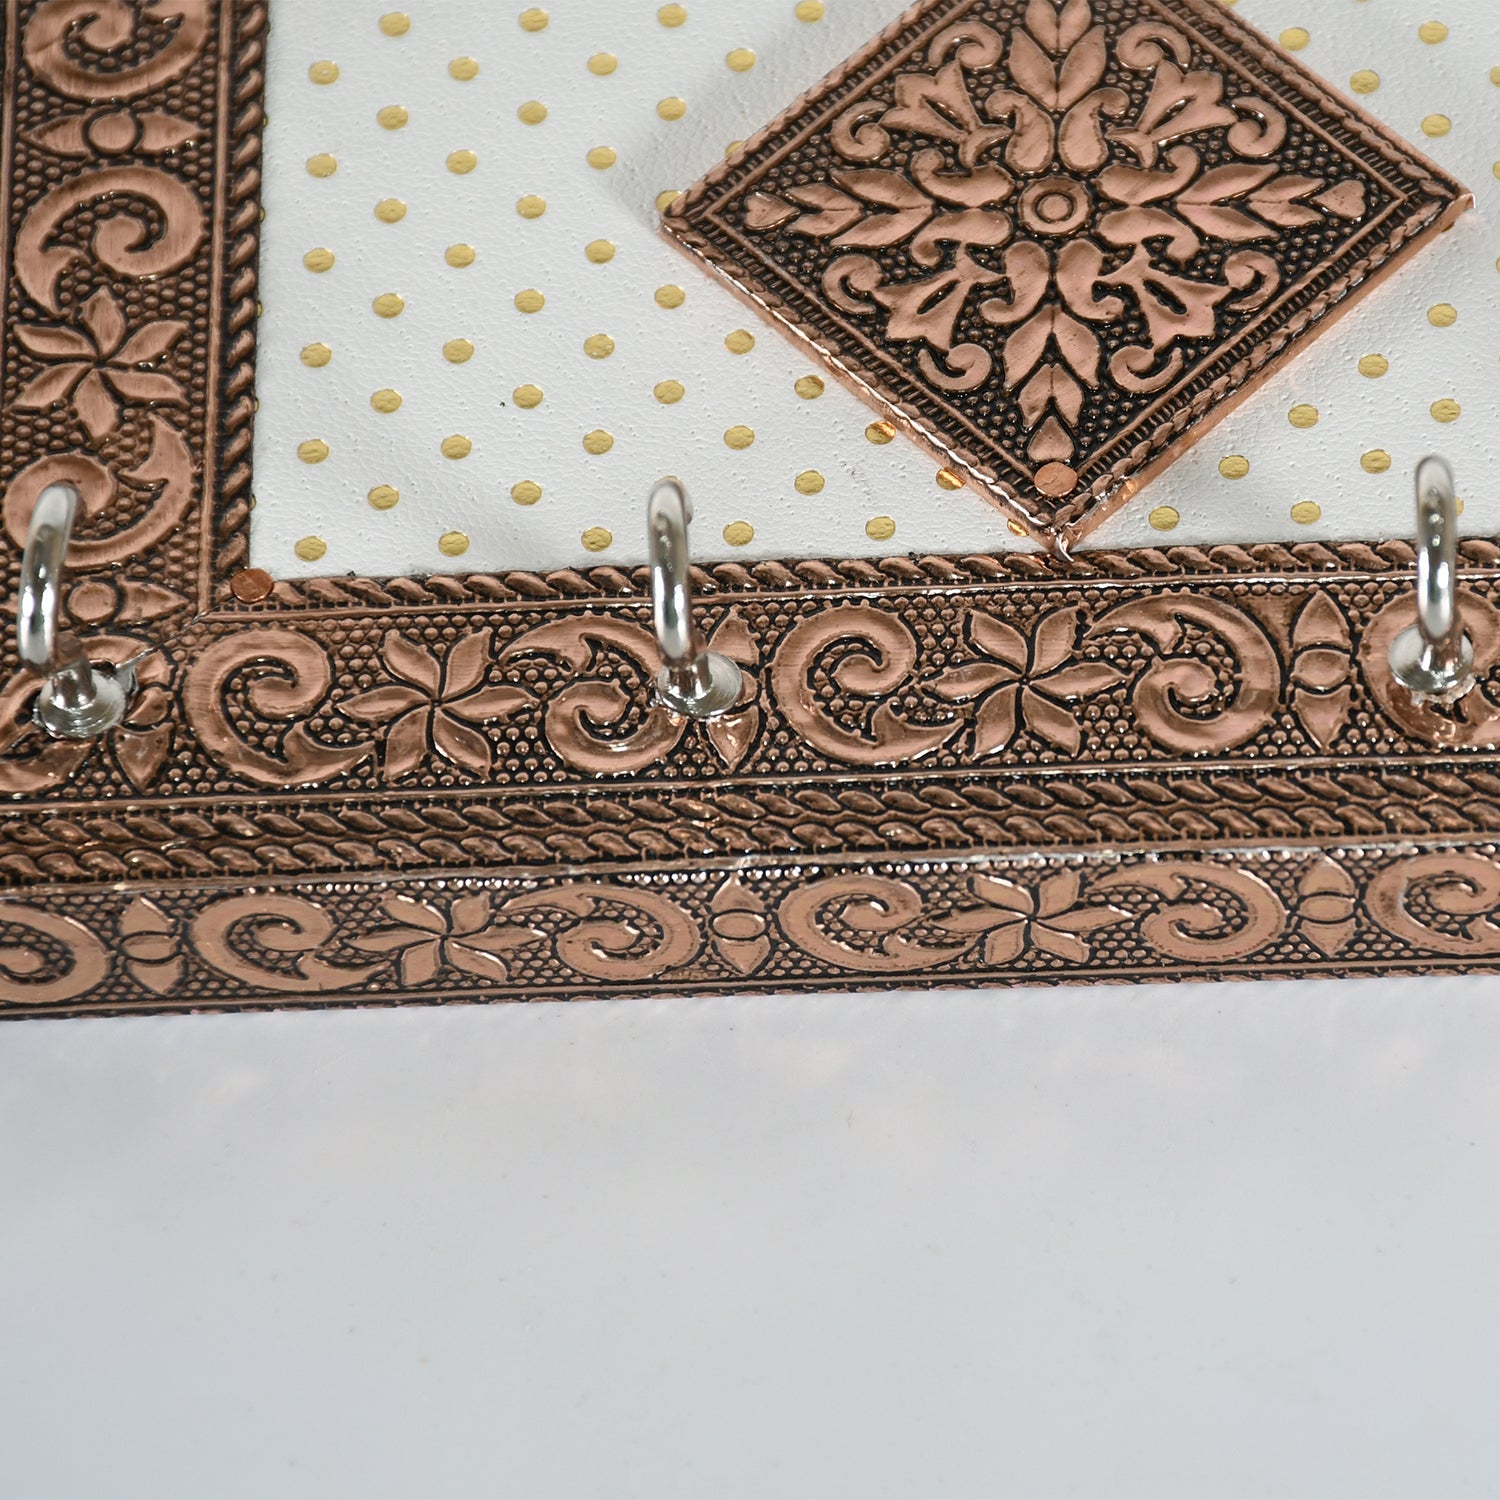 7598 Handicraft Meenakari Wooden keyholder | Wall Hanging Key Holder Style for Your Home Decor & Gift Keys Stand for Entryway, Kitchen, Office, Bedroom Decorative Keys Organizer keyholder (2 Pc Set)